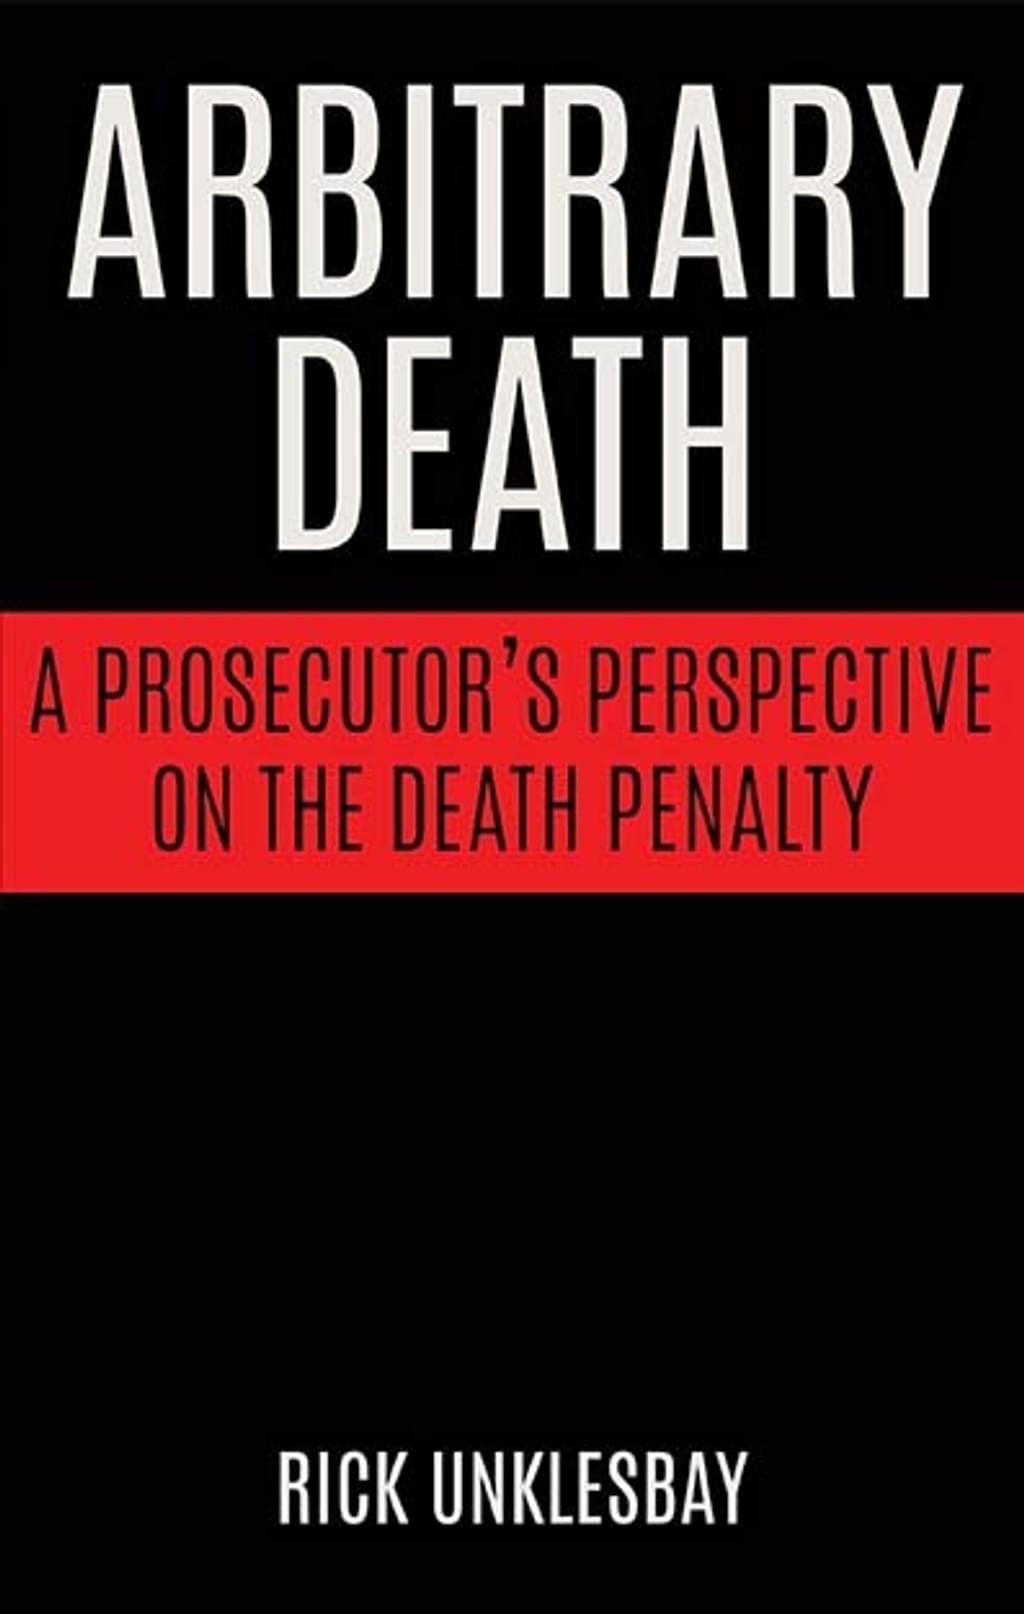 Books: “Arbitrary Death” Reveals a Prosecutor’s Evolution on Capital Punishment